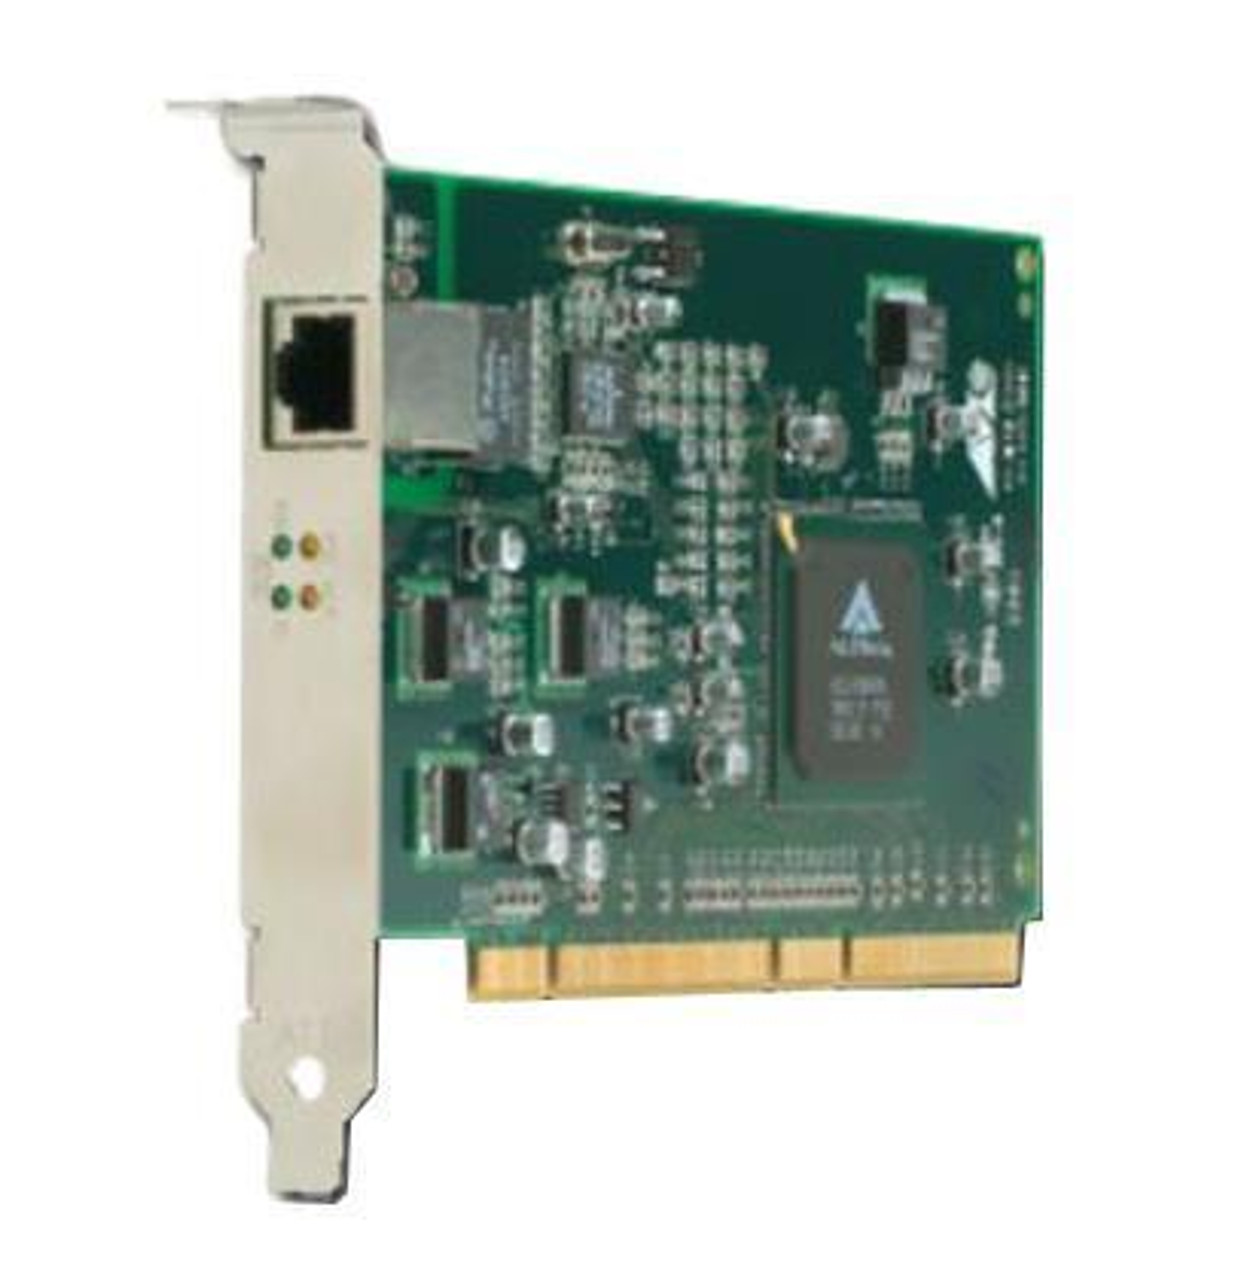 AT-2930SX-001 Allied Telesis Single-Port SC 1Gbps 1000Base-SX Gigabit Ethernet PCI Network Adapter